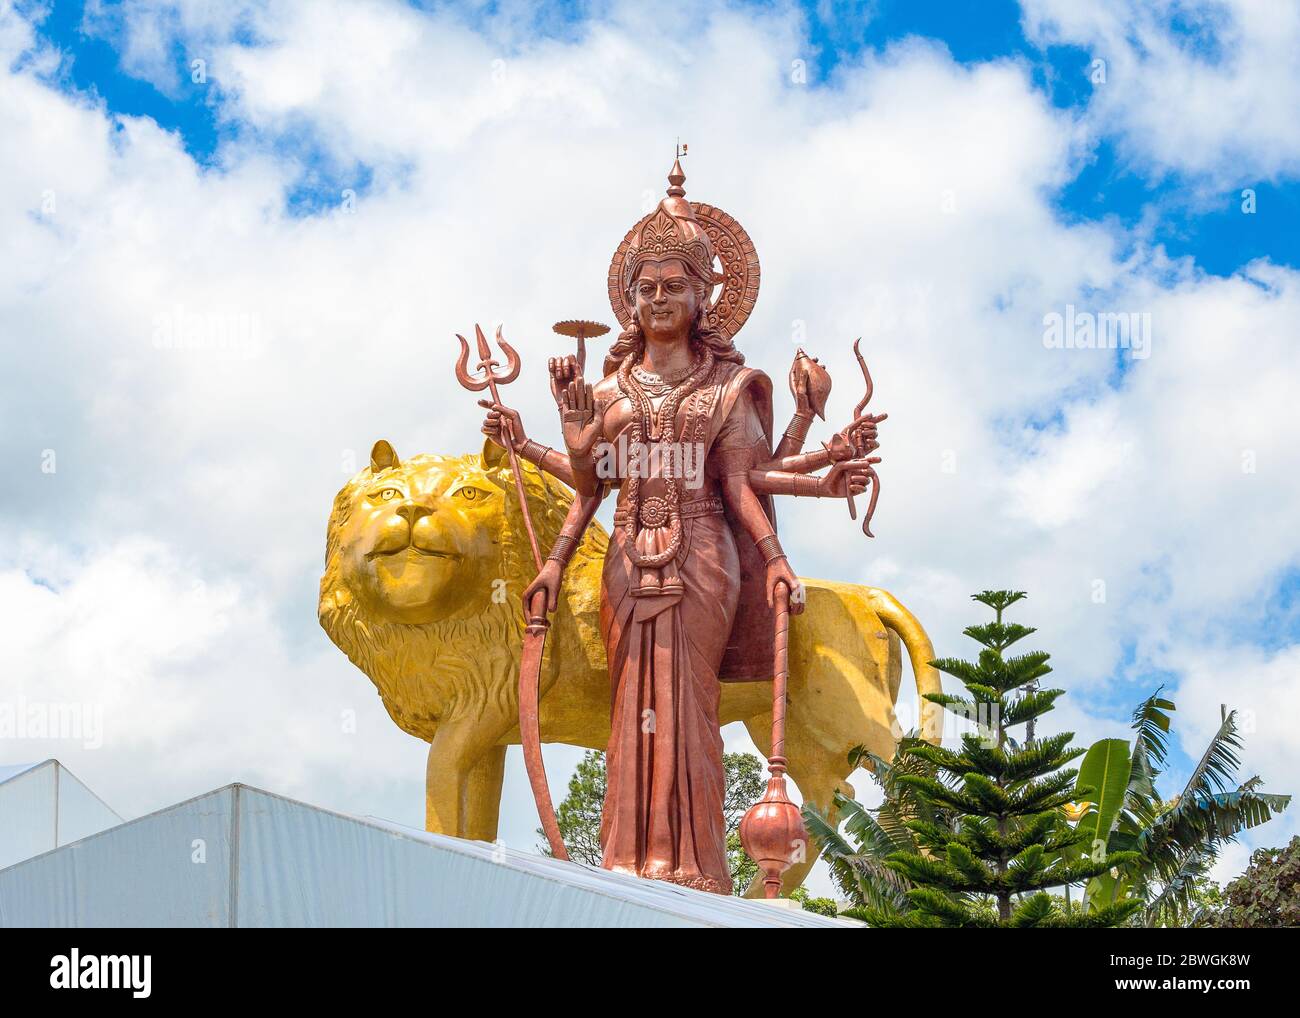 The highest statue of the Goddess Durga in the world in sacred Ganga Talao - Grand bassin crater lake, Mauritius island Stock Photo